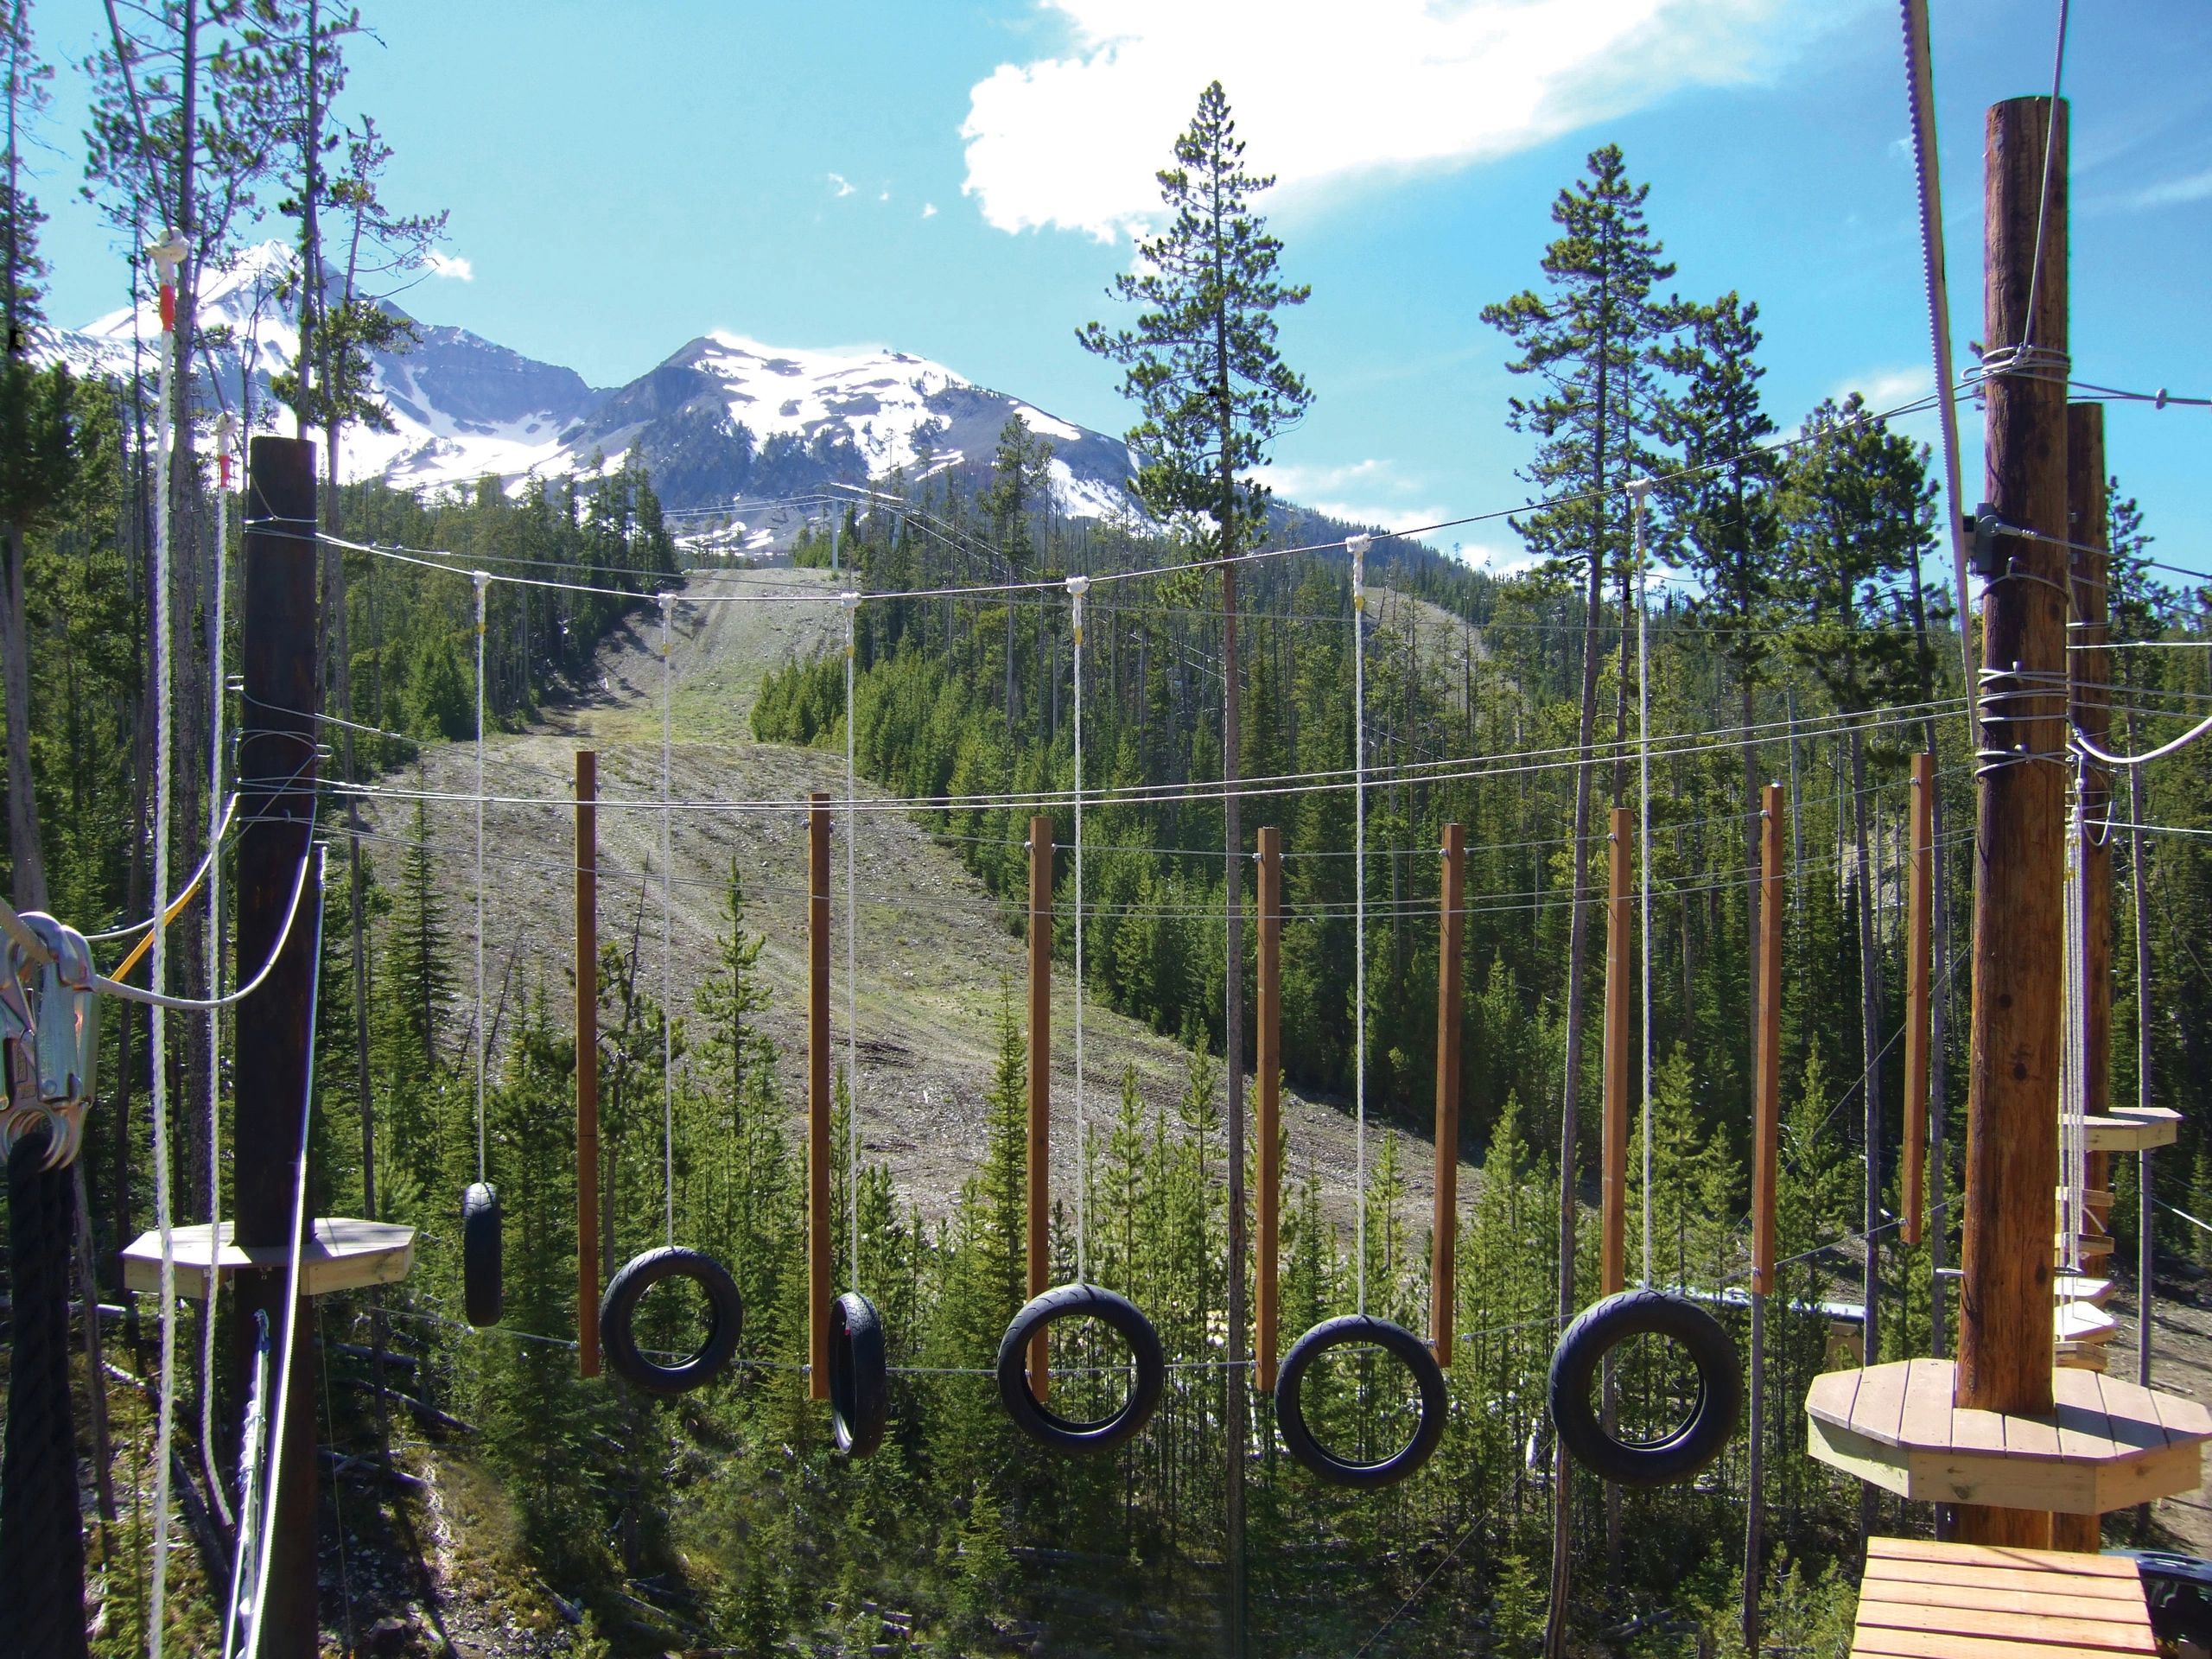 High Ropes Course activity at aerial adventure park in Colorado.